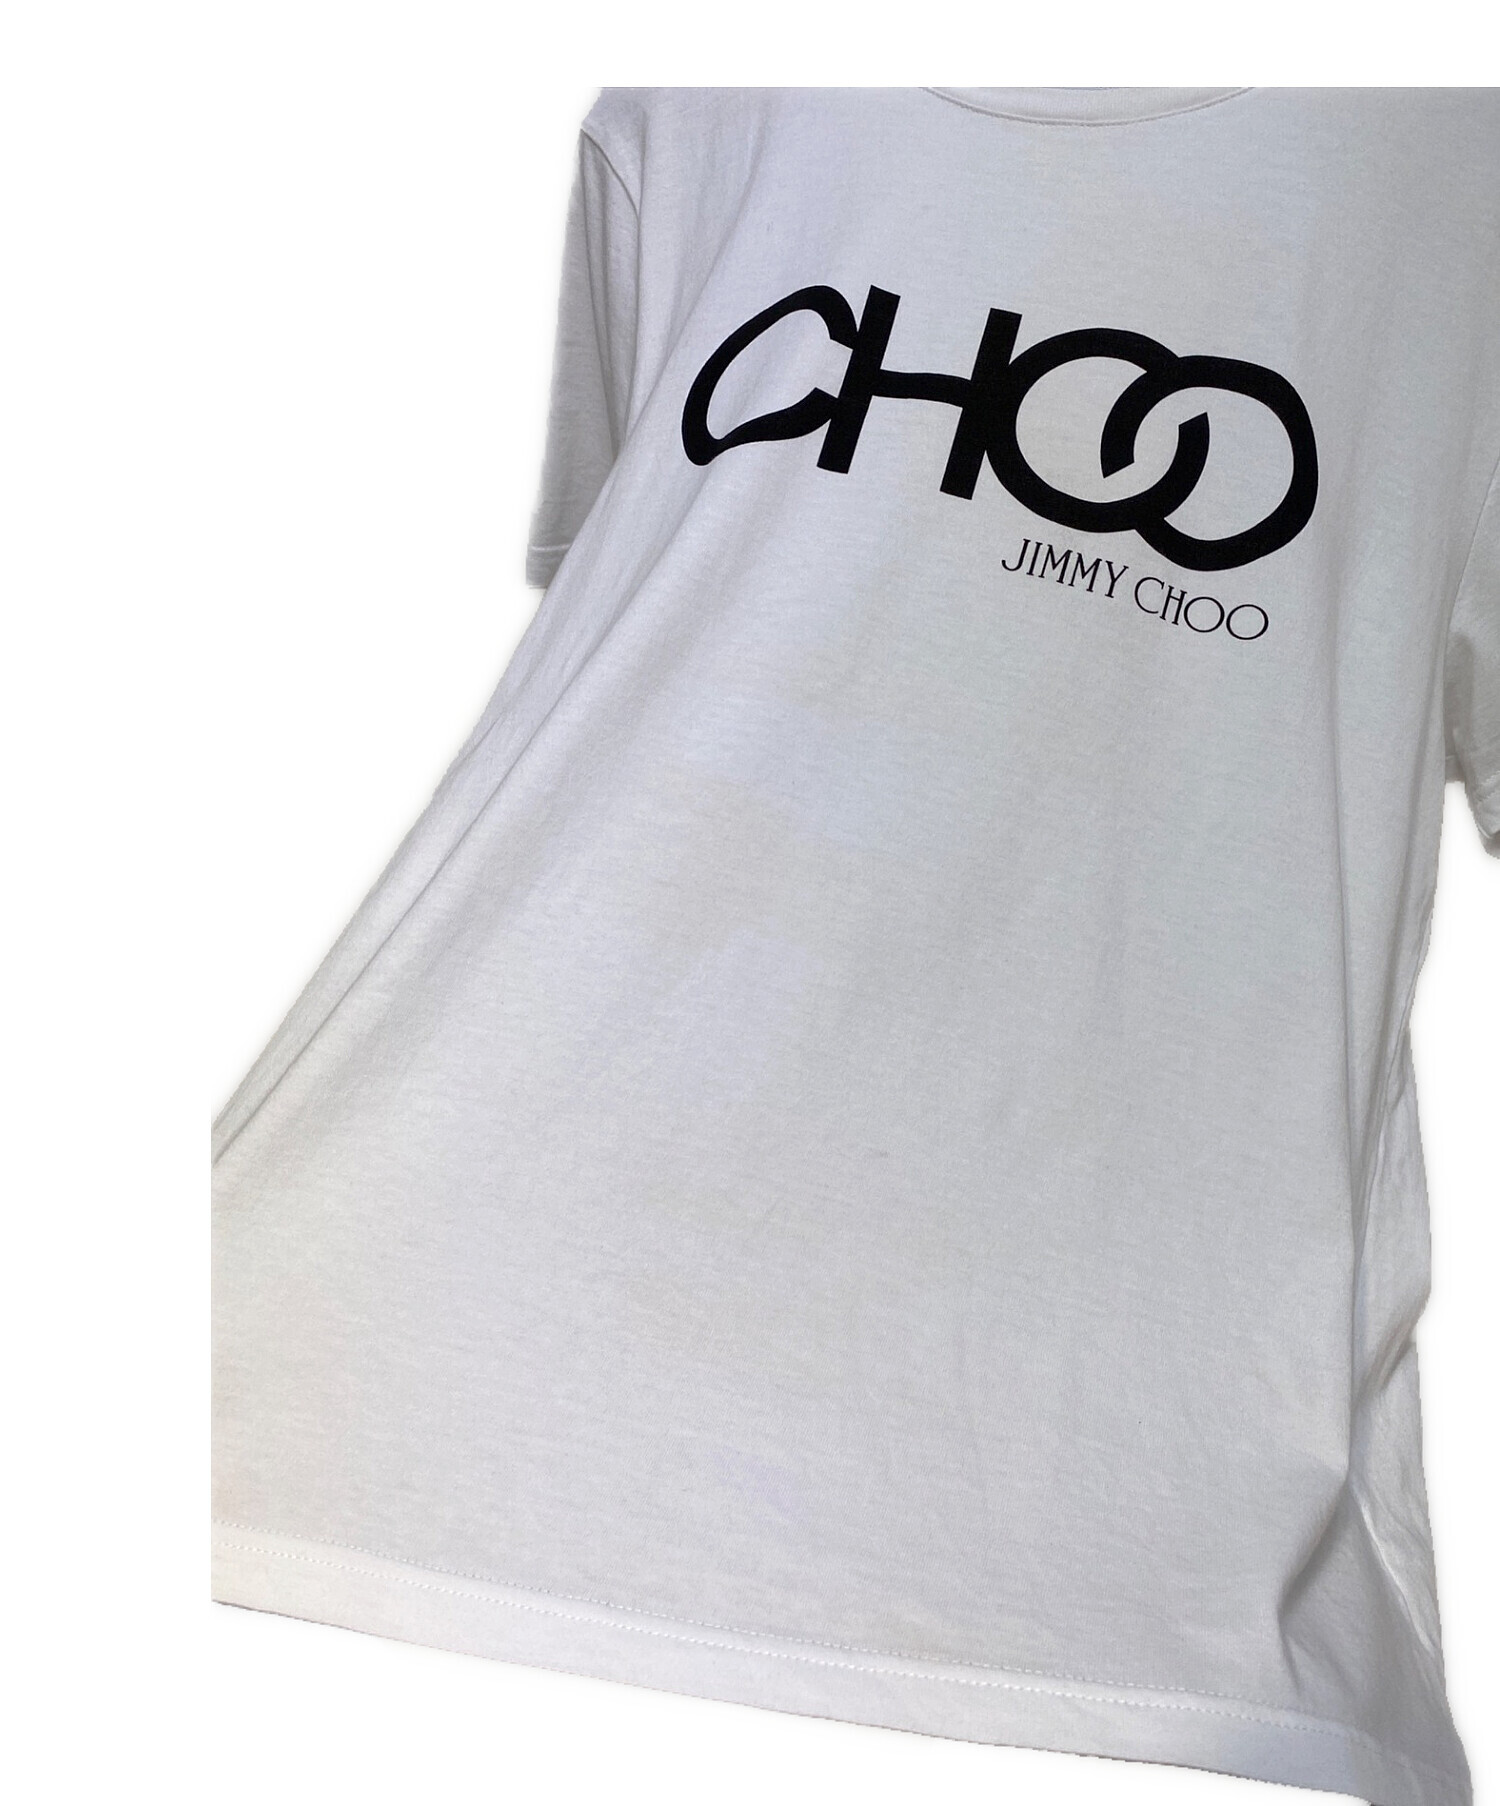 JIMMY CHOO (ジミーチュウ) ロゴTシャツ ホワイト サイズ:L